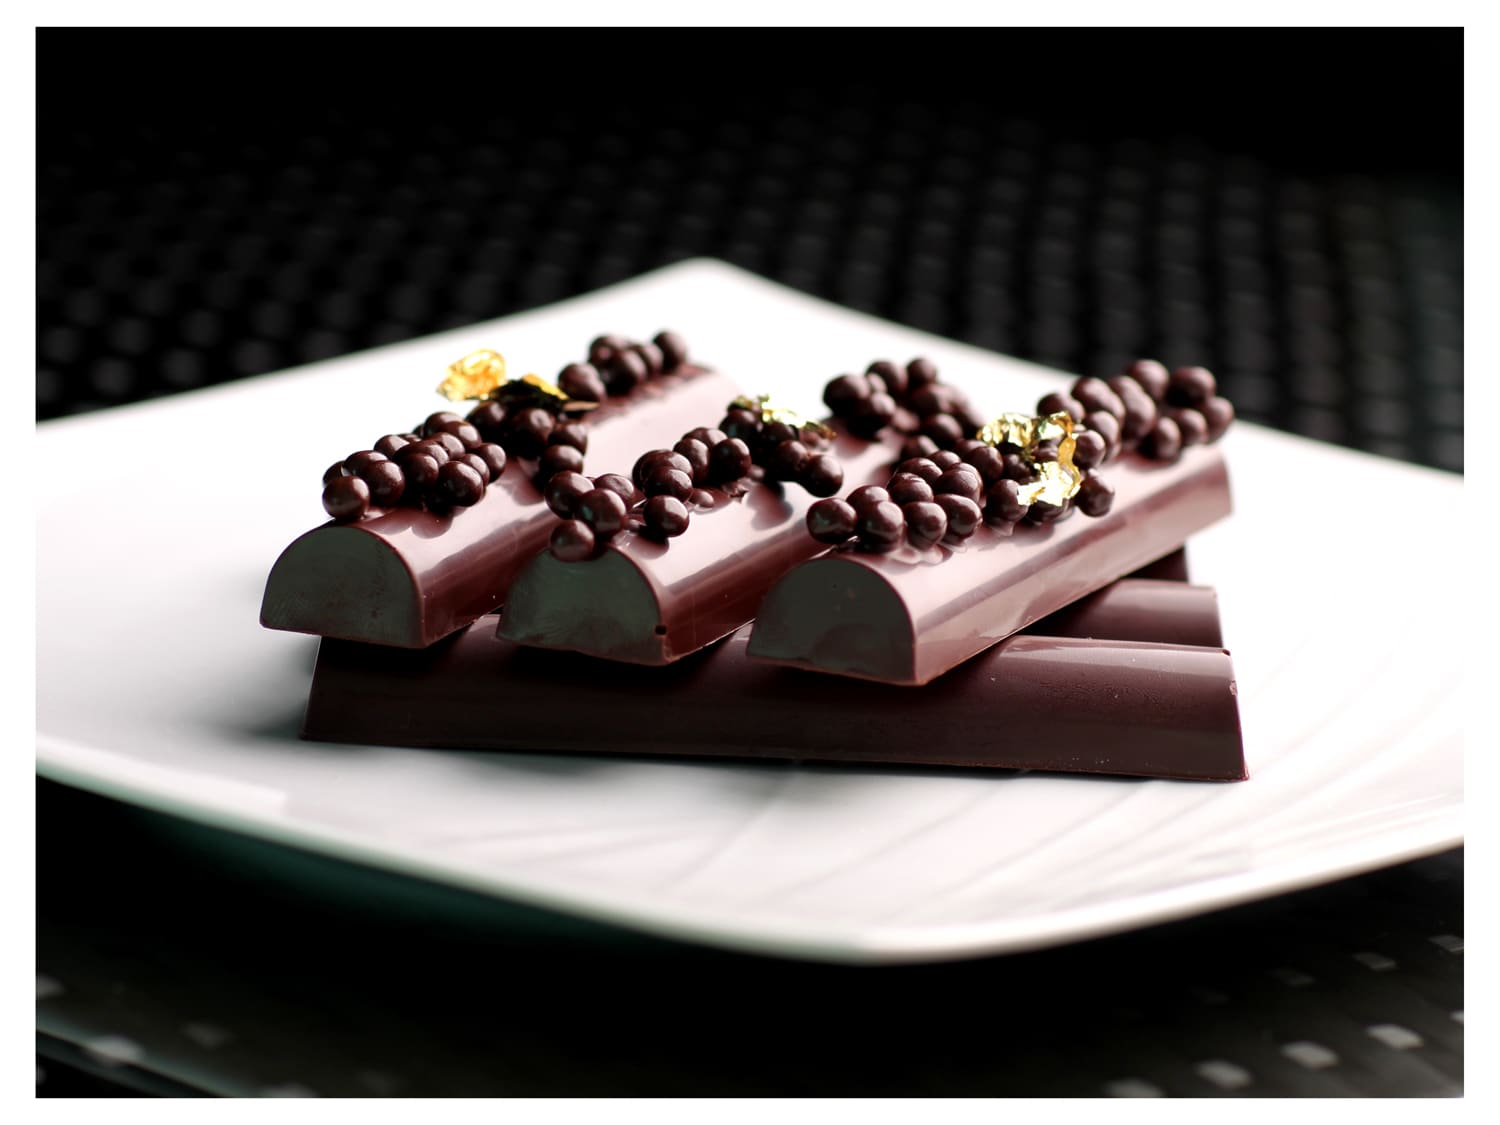 100g Love Bar Chocolate Mould, Design & Realisation